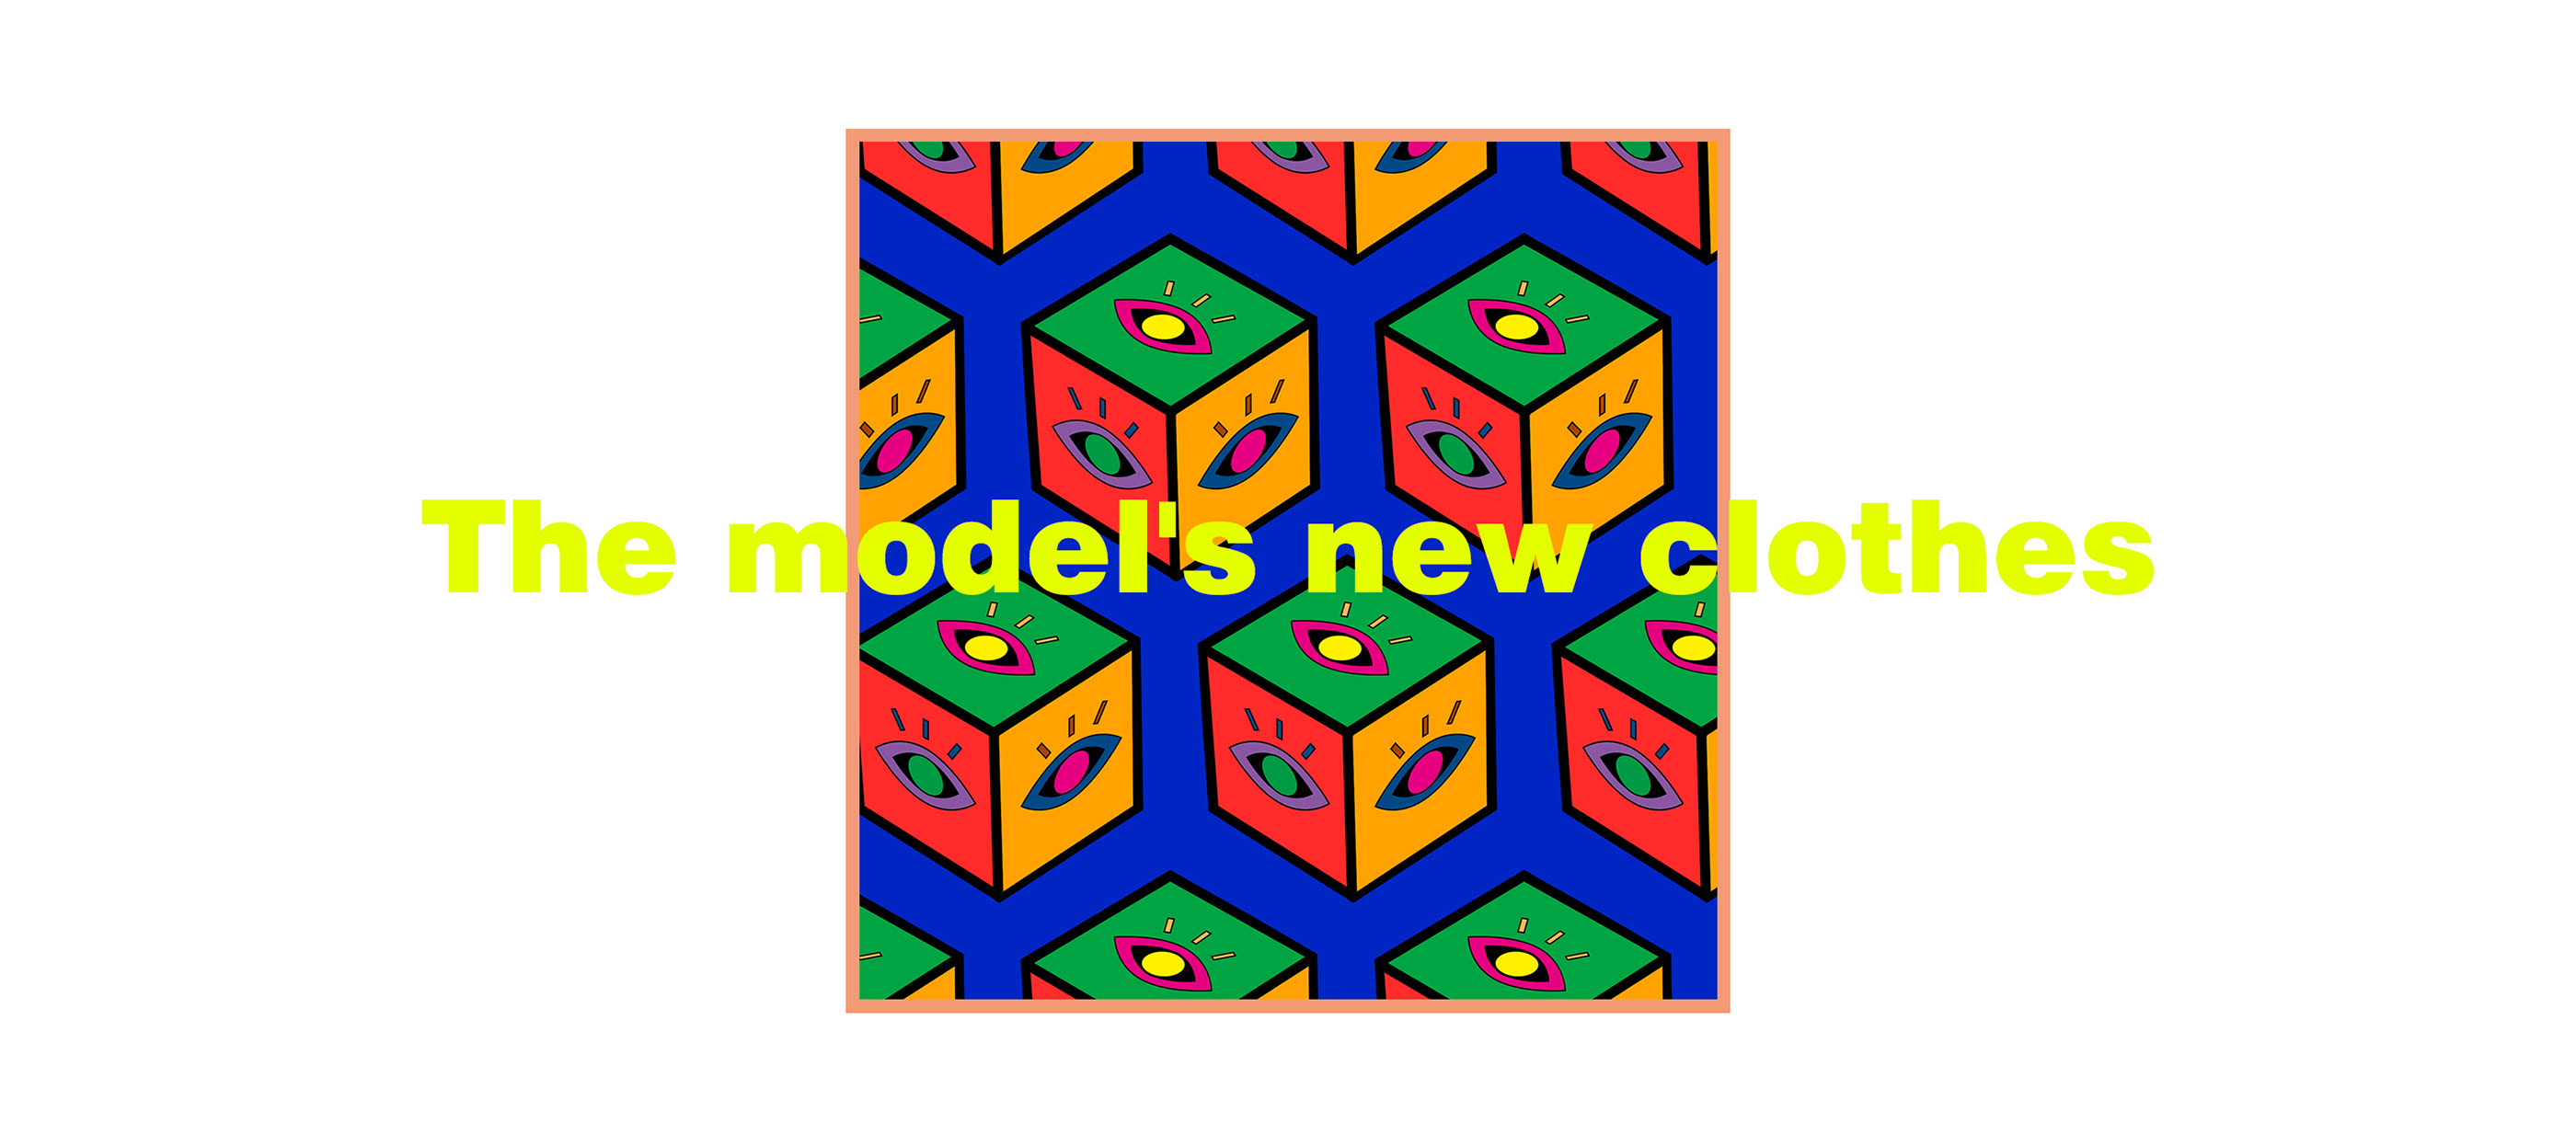 The model's new clothes on Behancee8b2f792807755.5e55f40896bb4.jpg